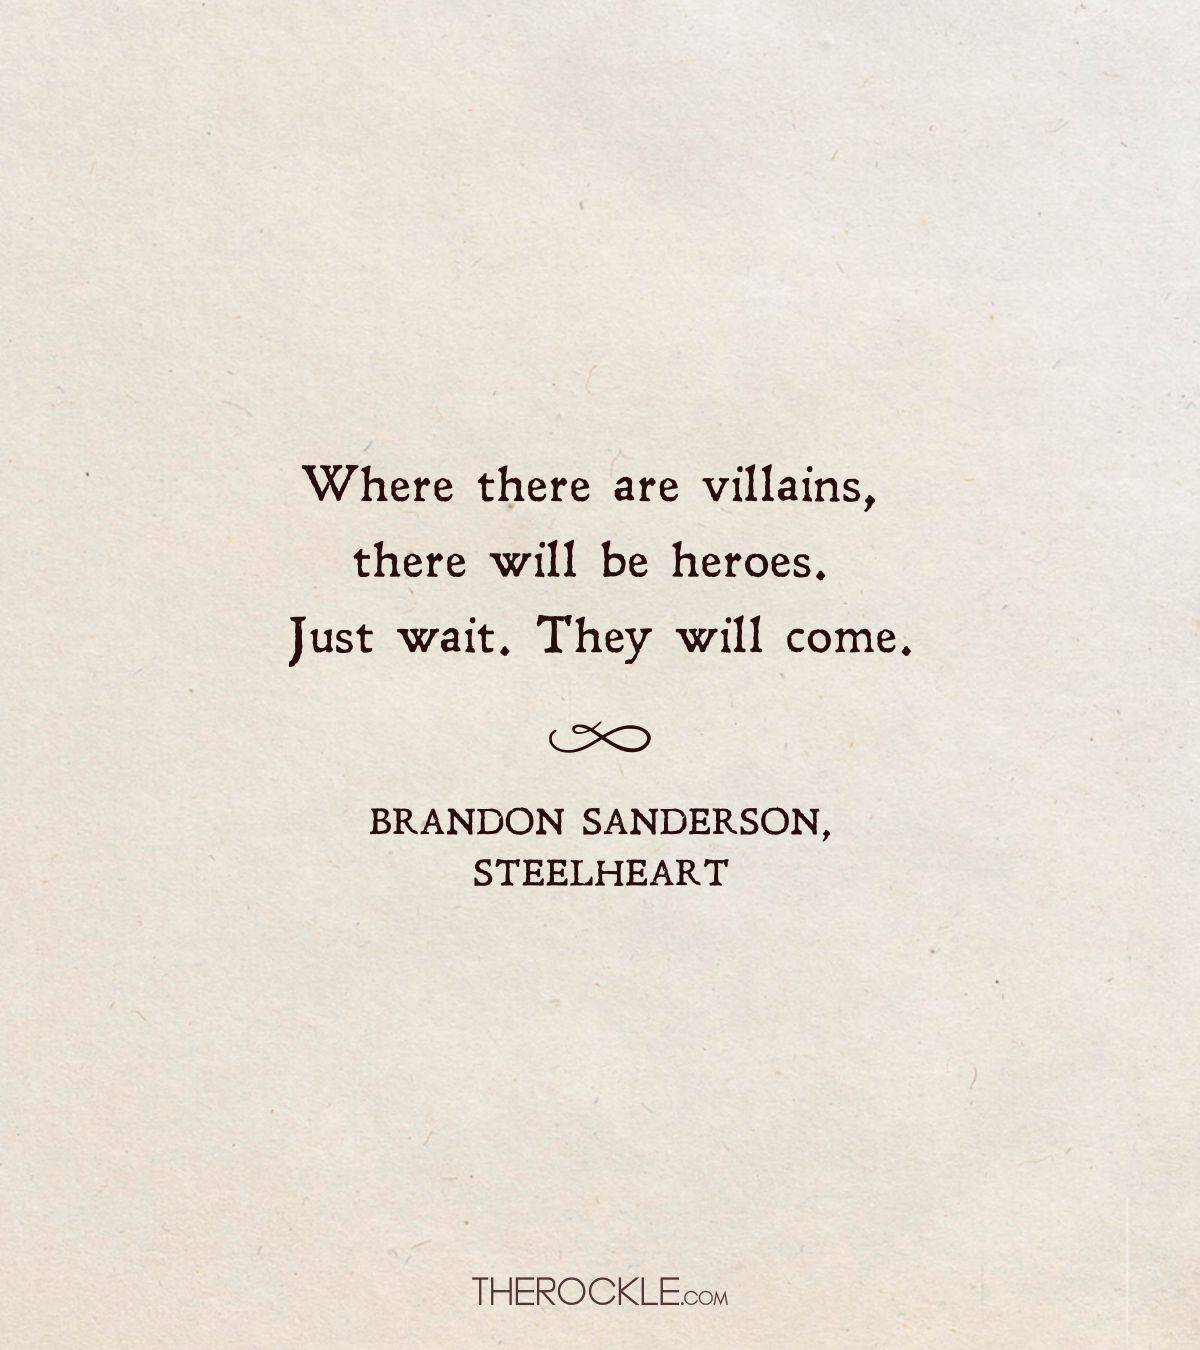 Brandon Sandersonon heroes and villains